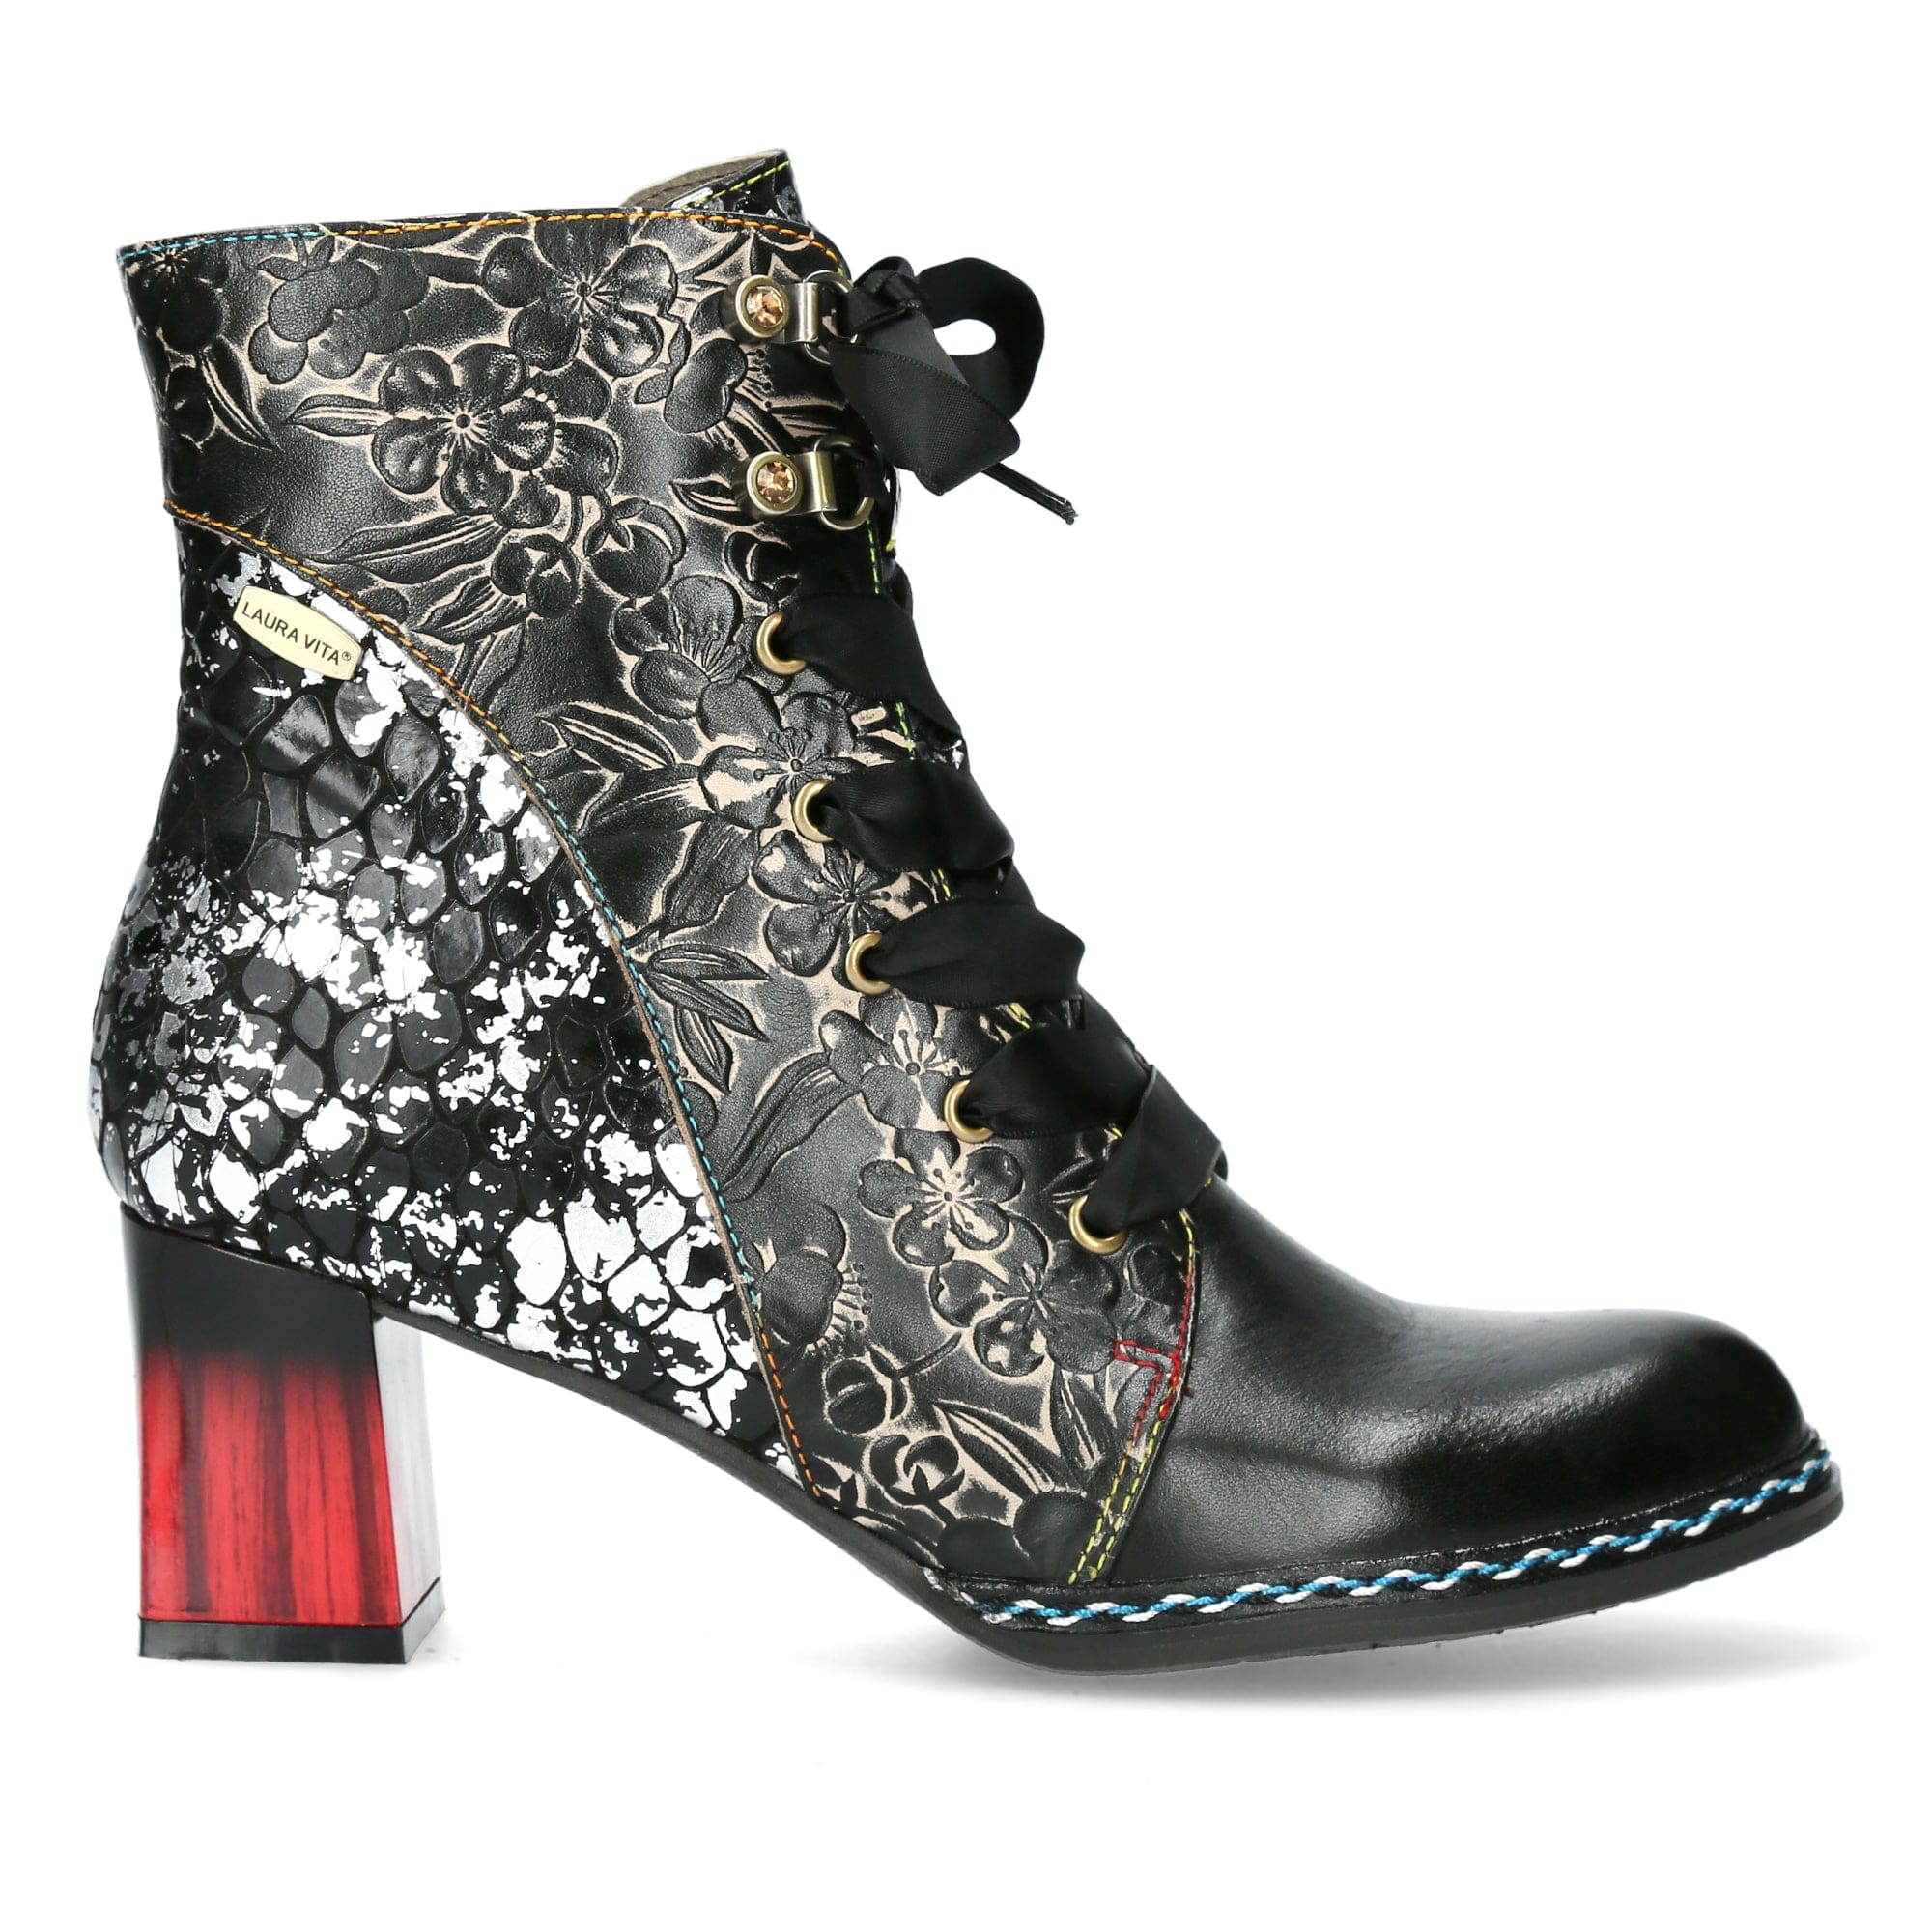 Chaussure GACLAO 10 - 35 / Noir - Boots